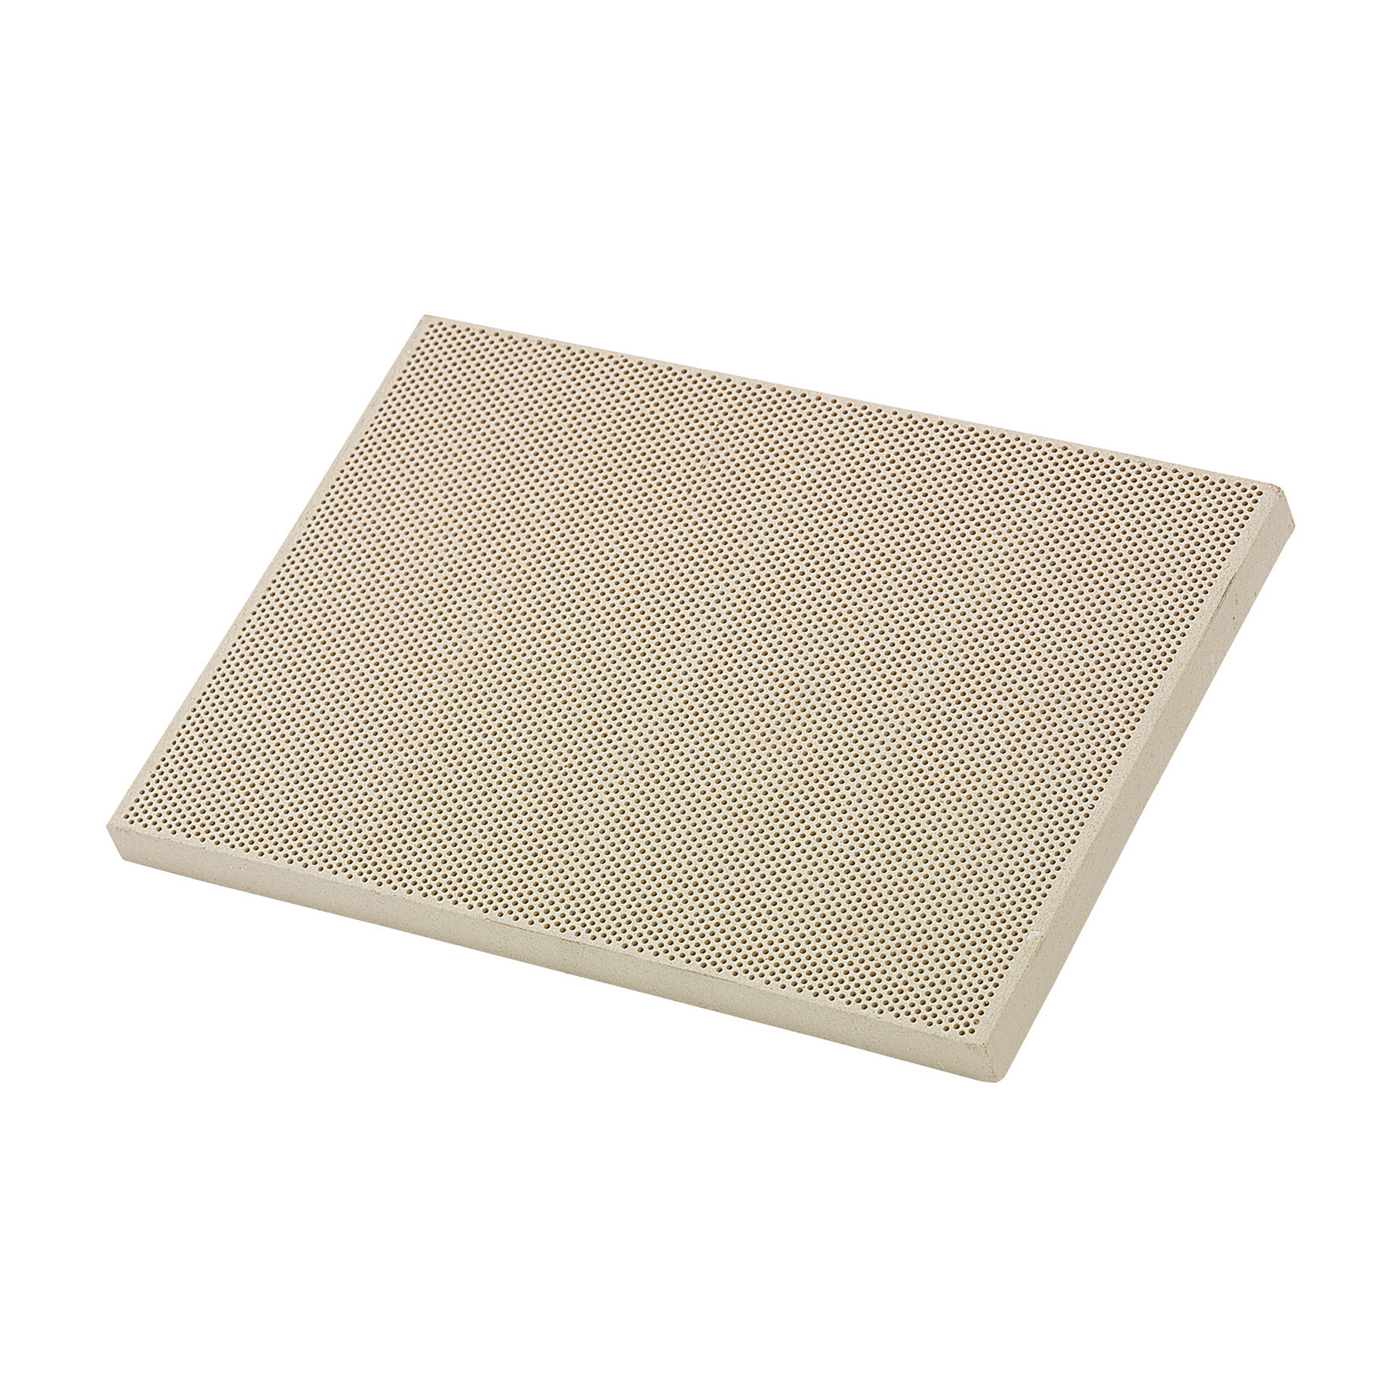 Honeycomb Soldering Plate, 198 x 140 x 13 mm - 1 piece